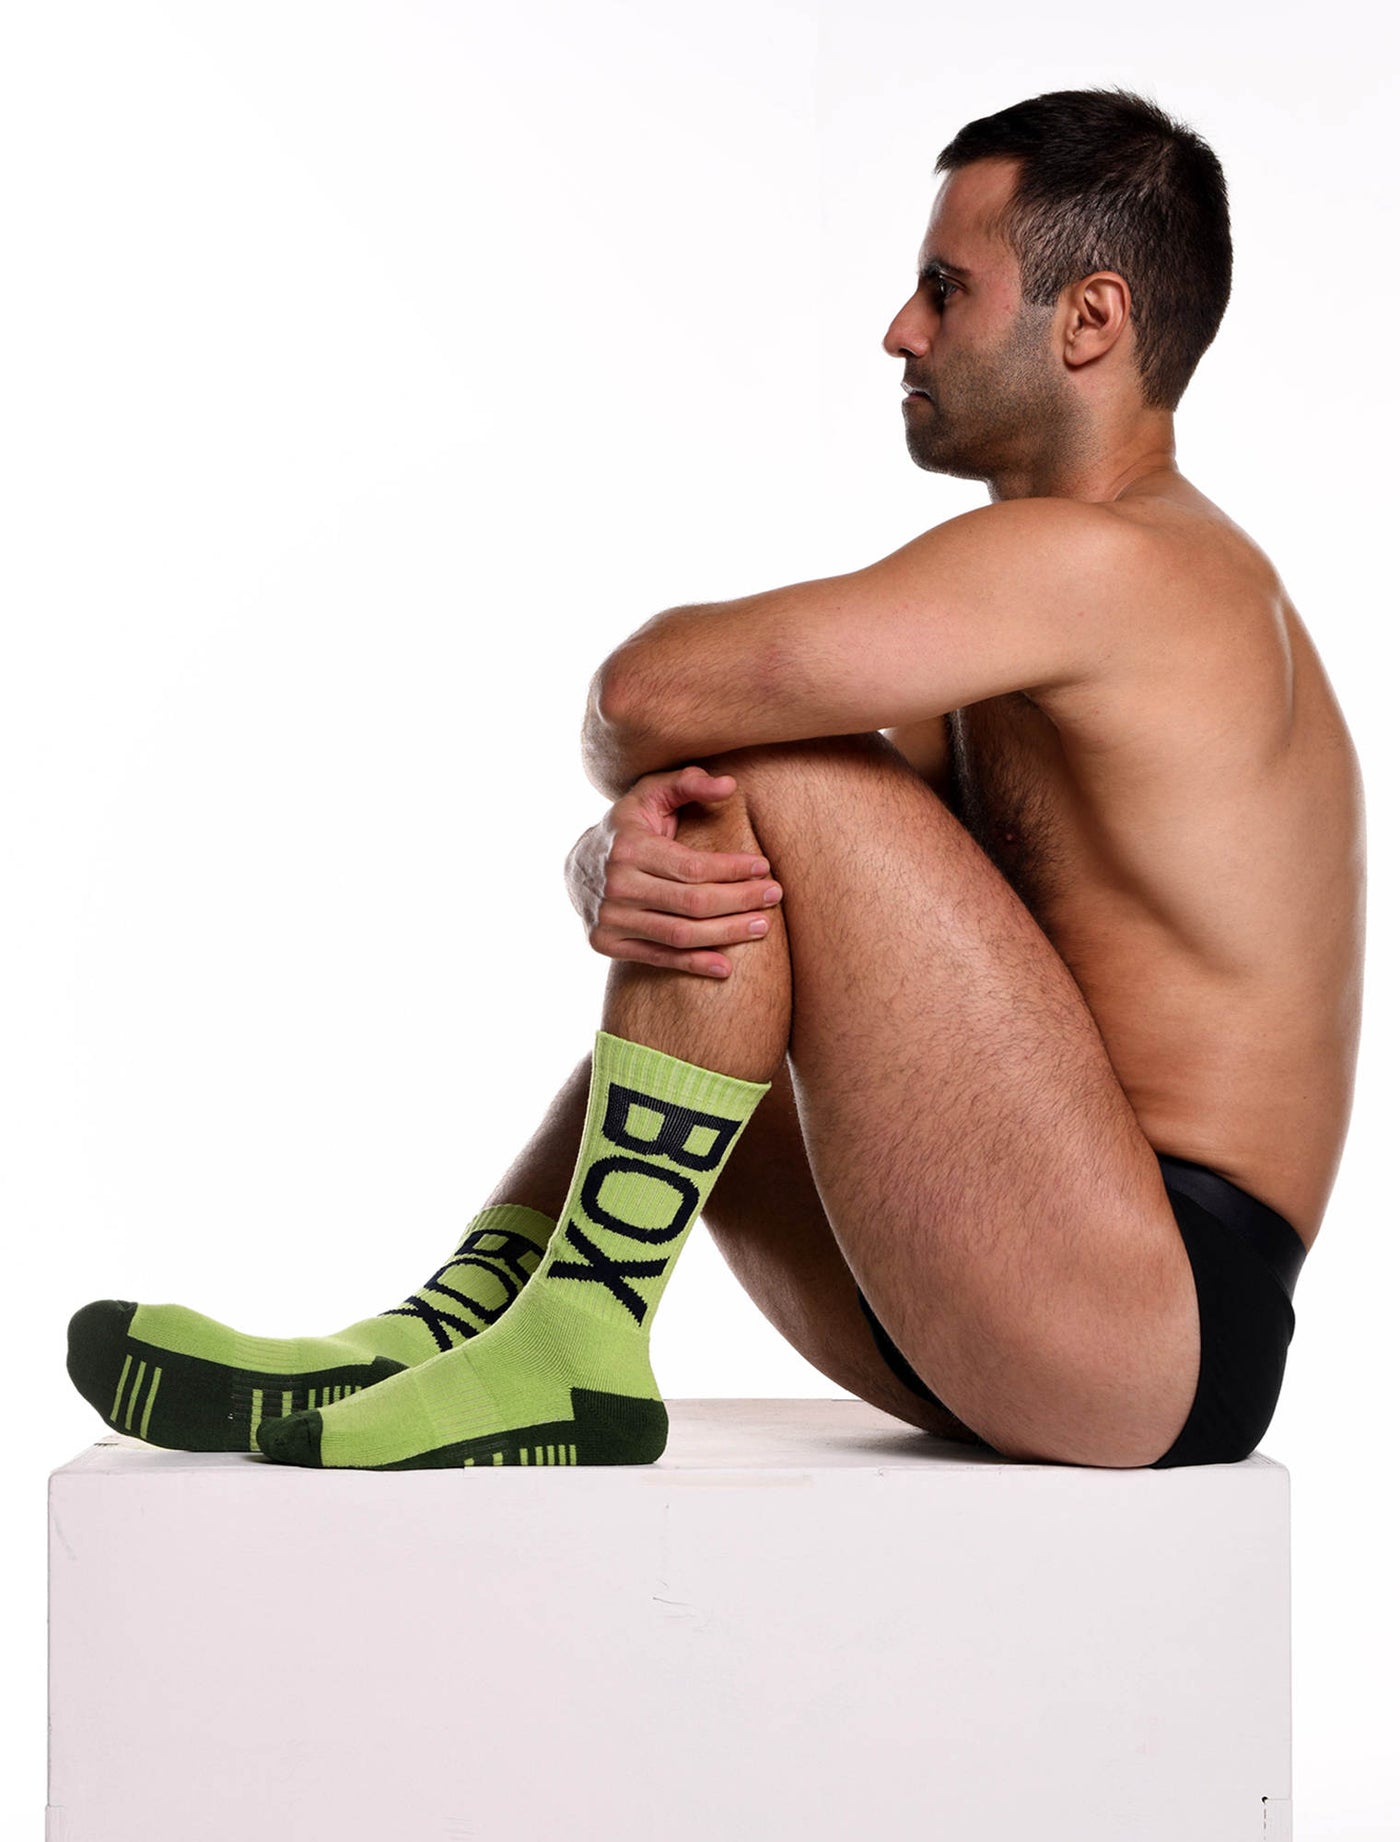 Box Sports Socks - Fluorescent Force One